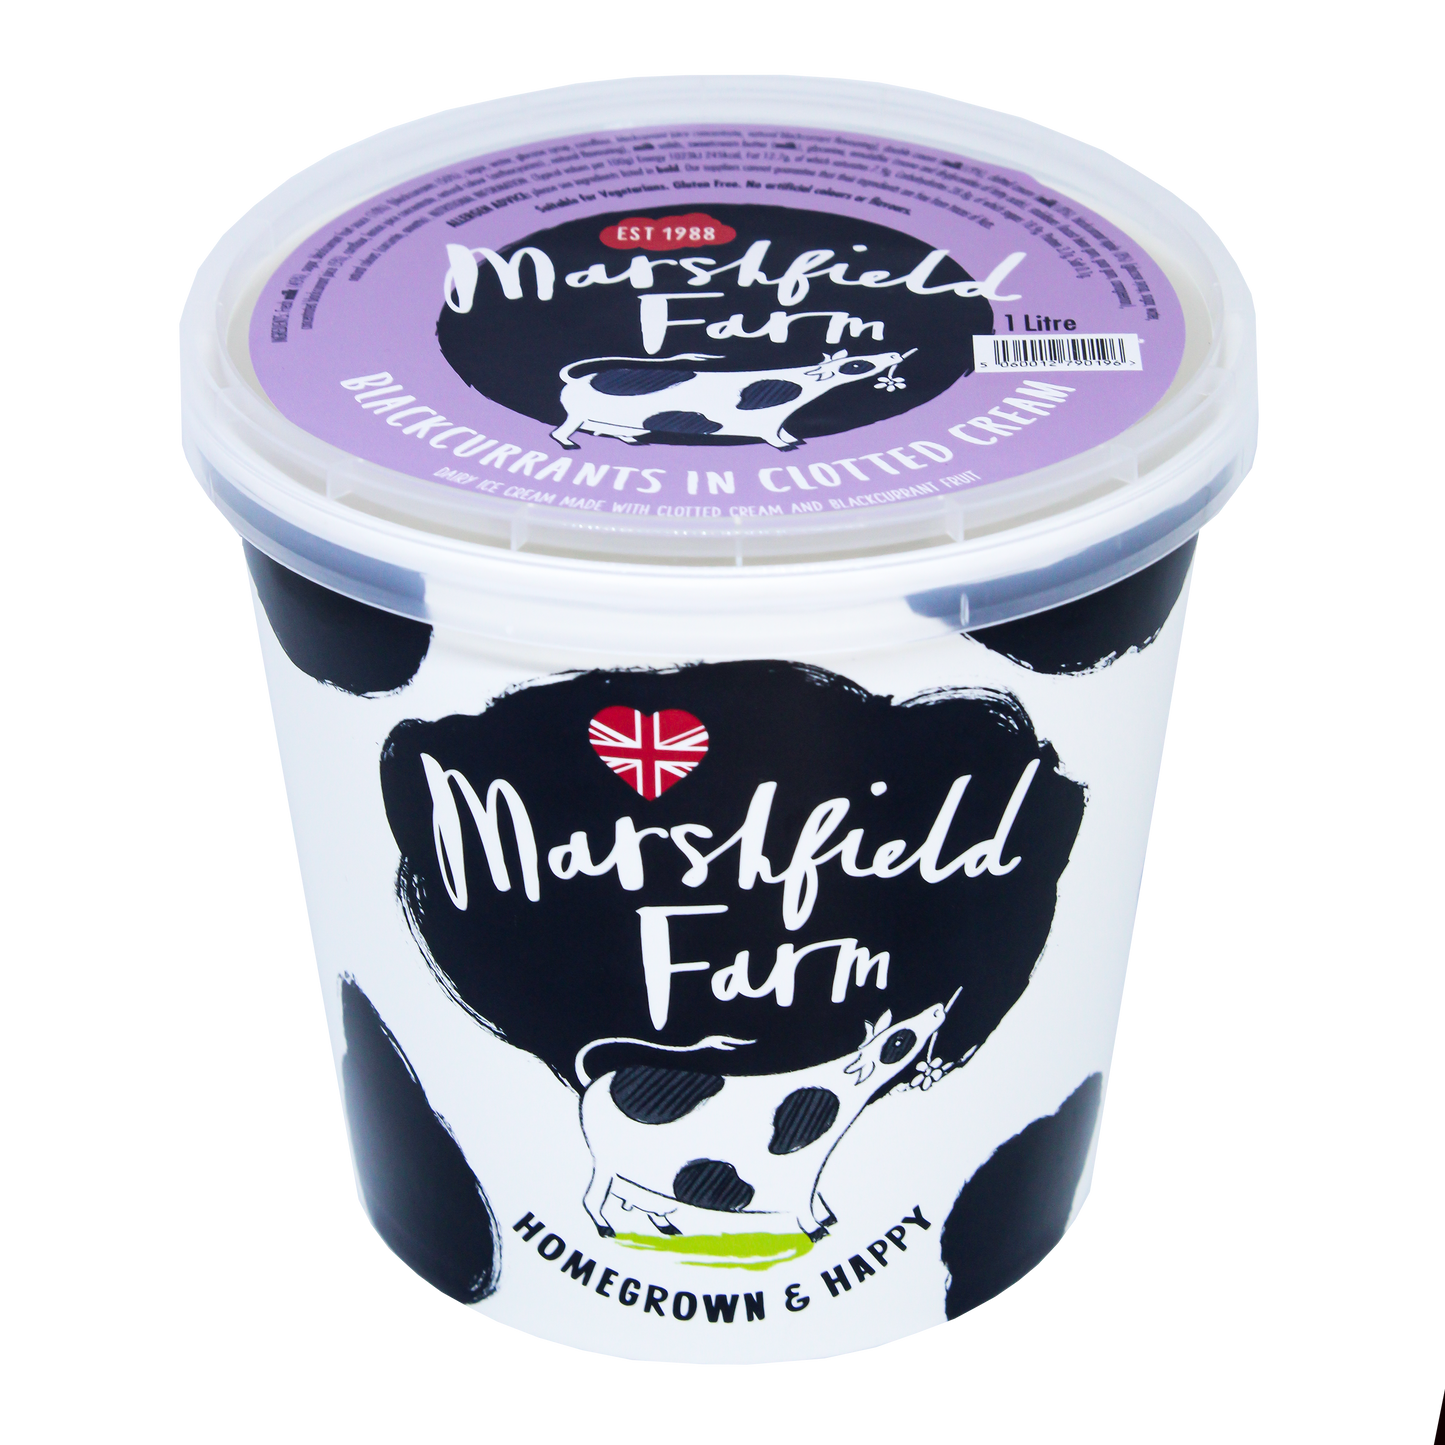 Marshfield Farm Blackcurrants in Clotted Cream Ice Cream 1 Litre Tub